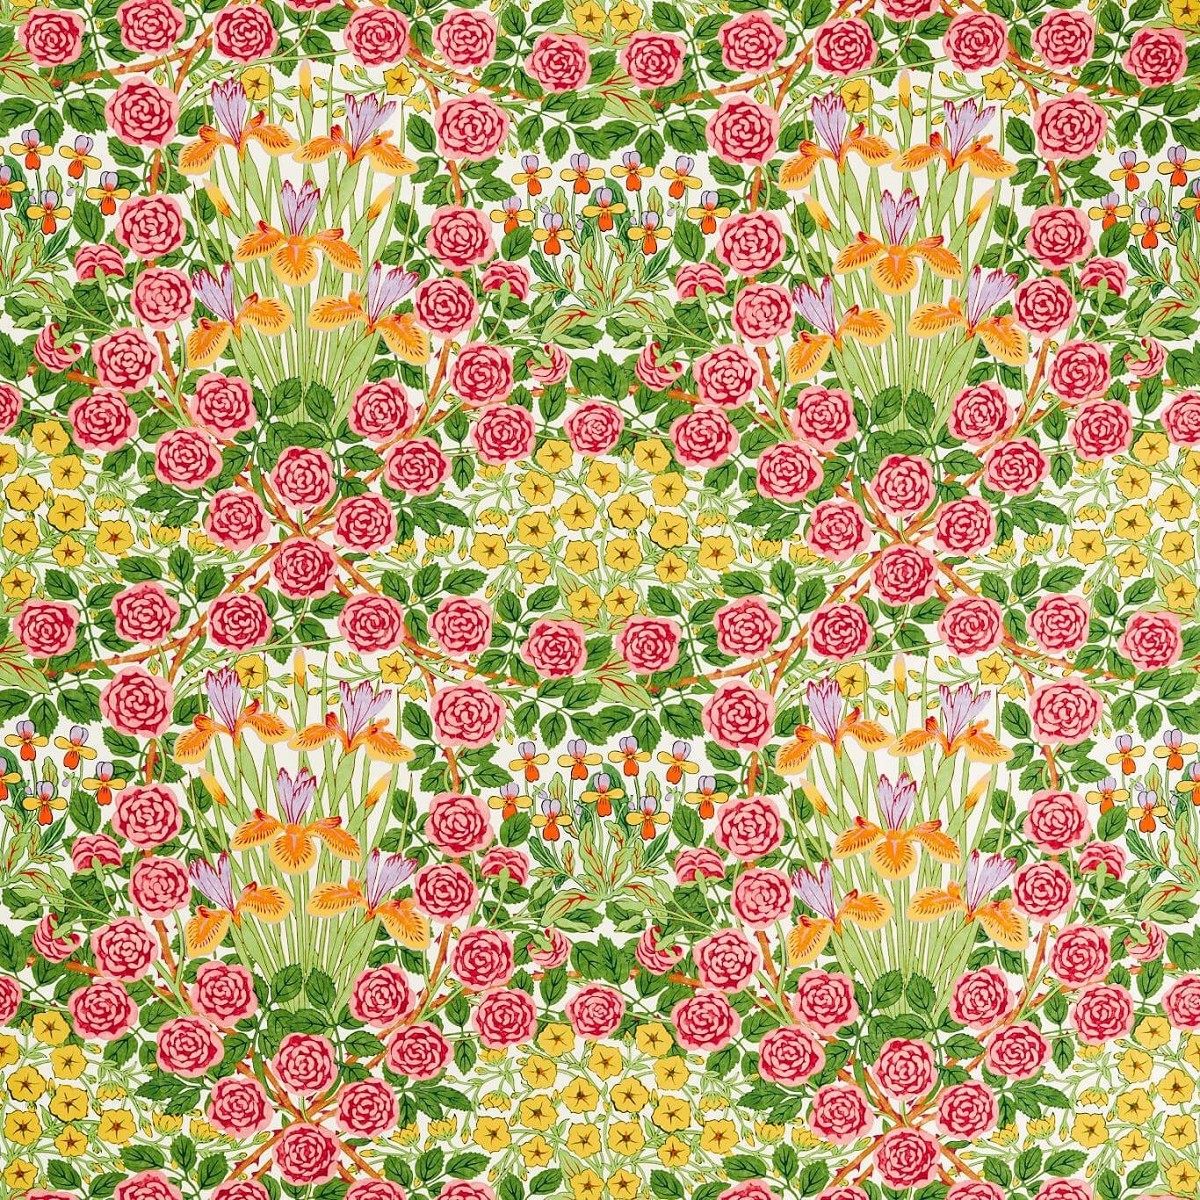 Campanula Sunburst Fabric by William Morris & Co.